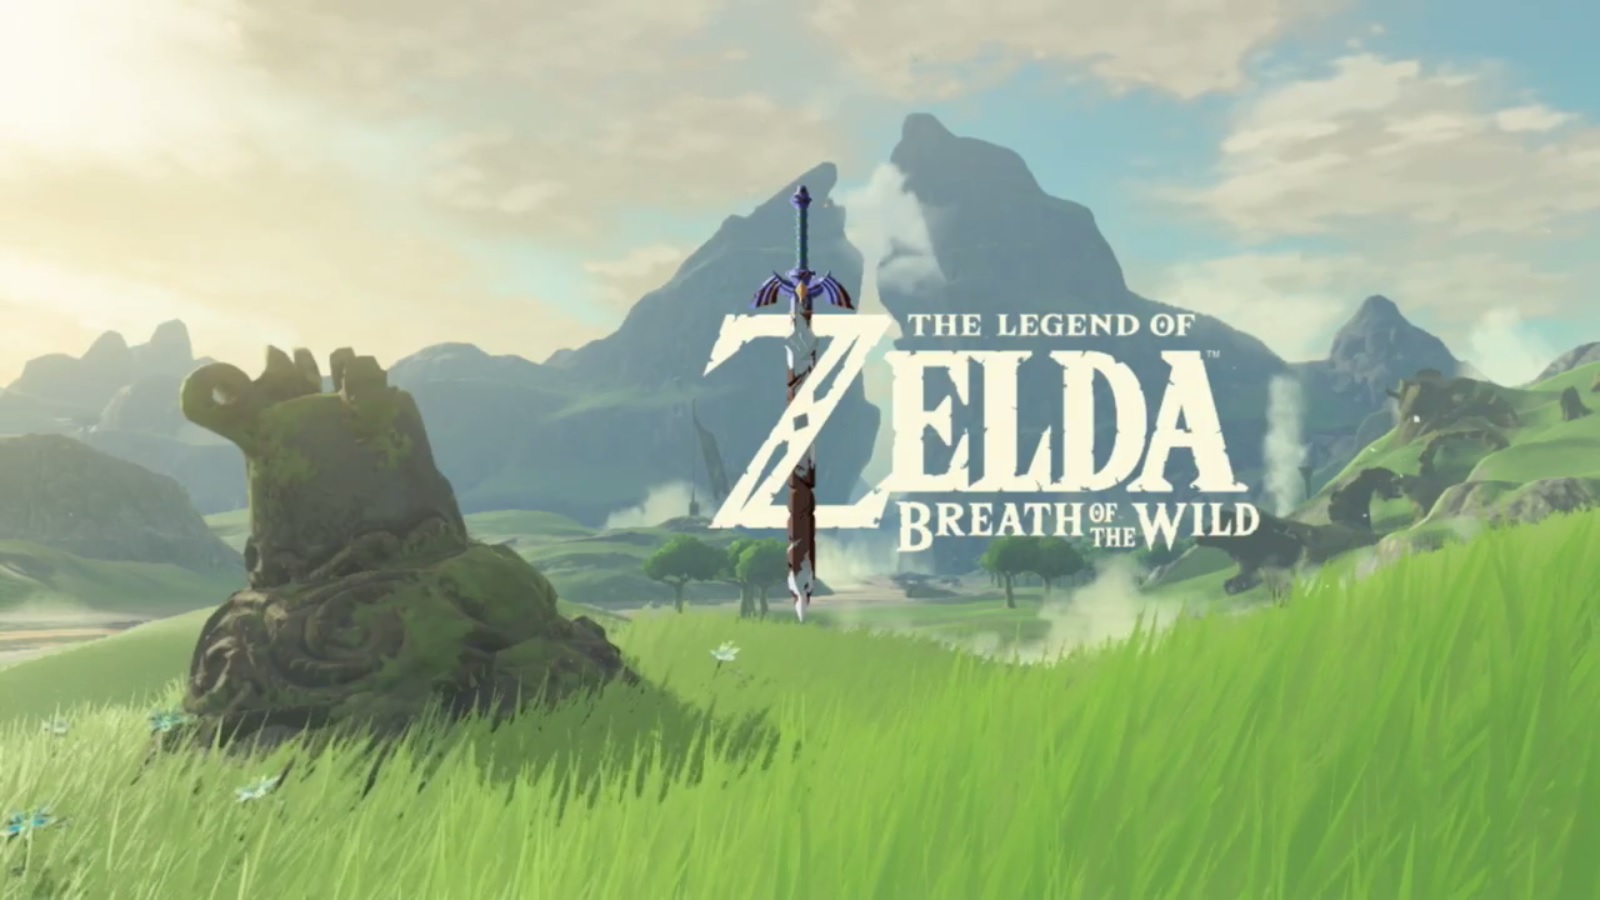 zuur werkplaats barrière Zelda: Breath of the Wild, 1-2-Switch receive ESRB ratings